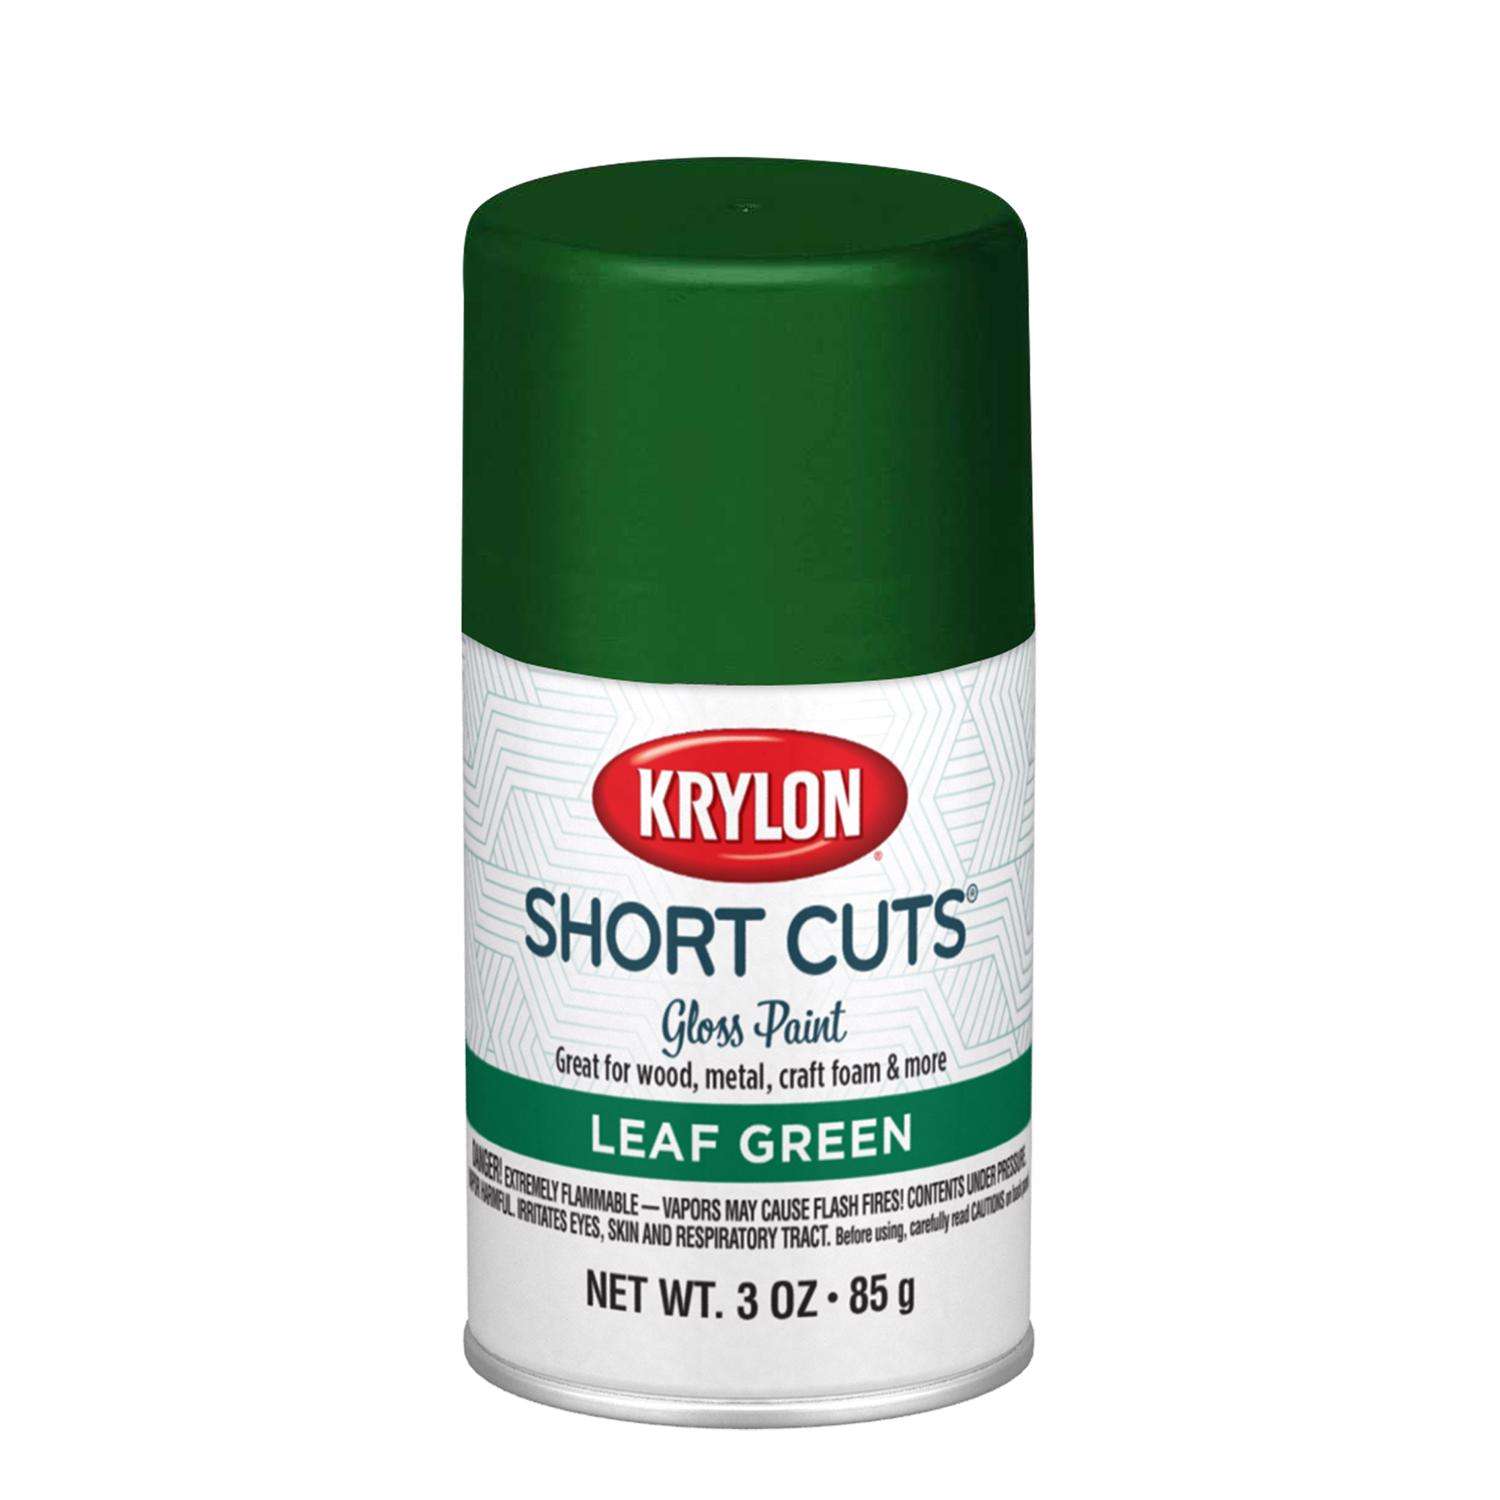 Krylon Fluorescent Paint - Green, Aerosol (11 oz.) 3106 - Advance Auto Parts